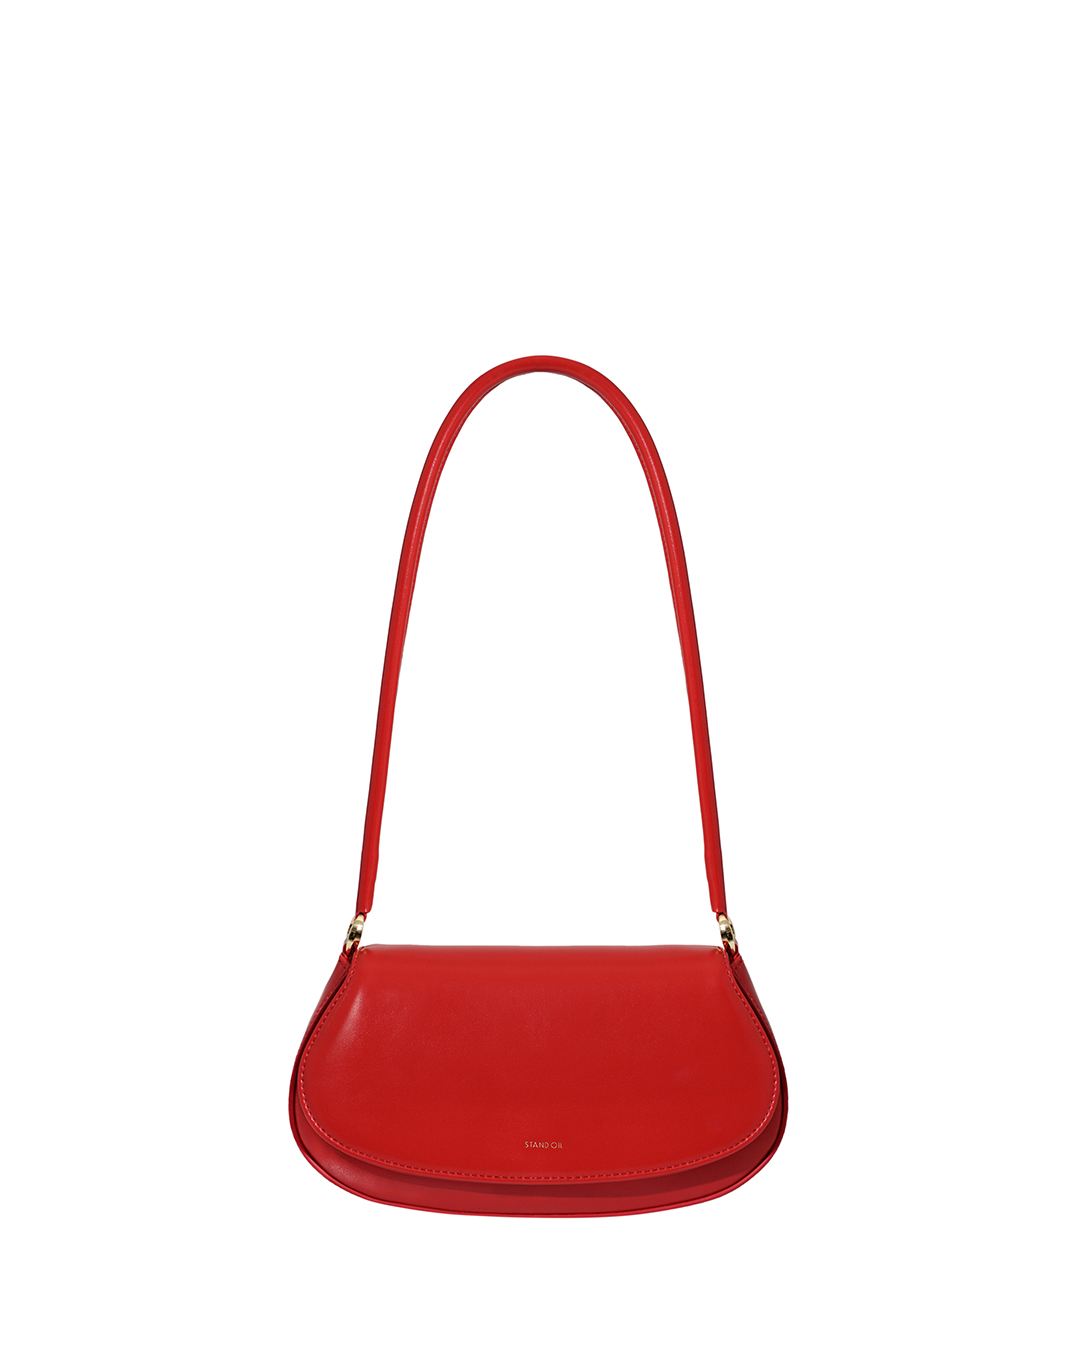 Stand Oil - Clam bag · 클램백 / 토마토